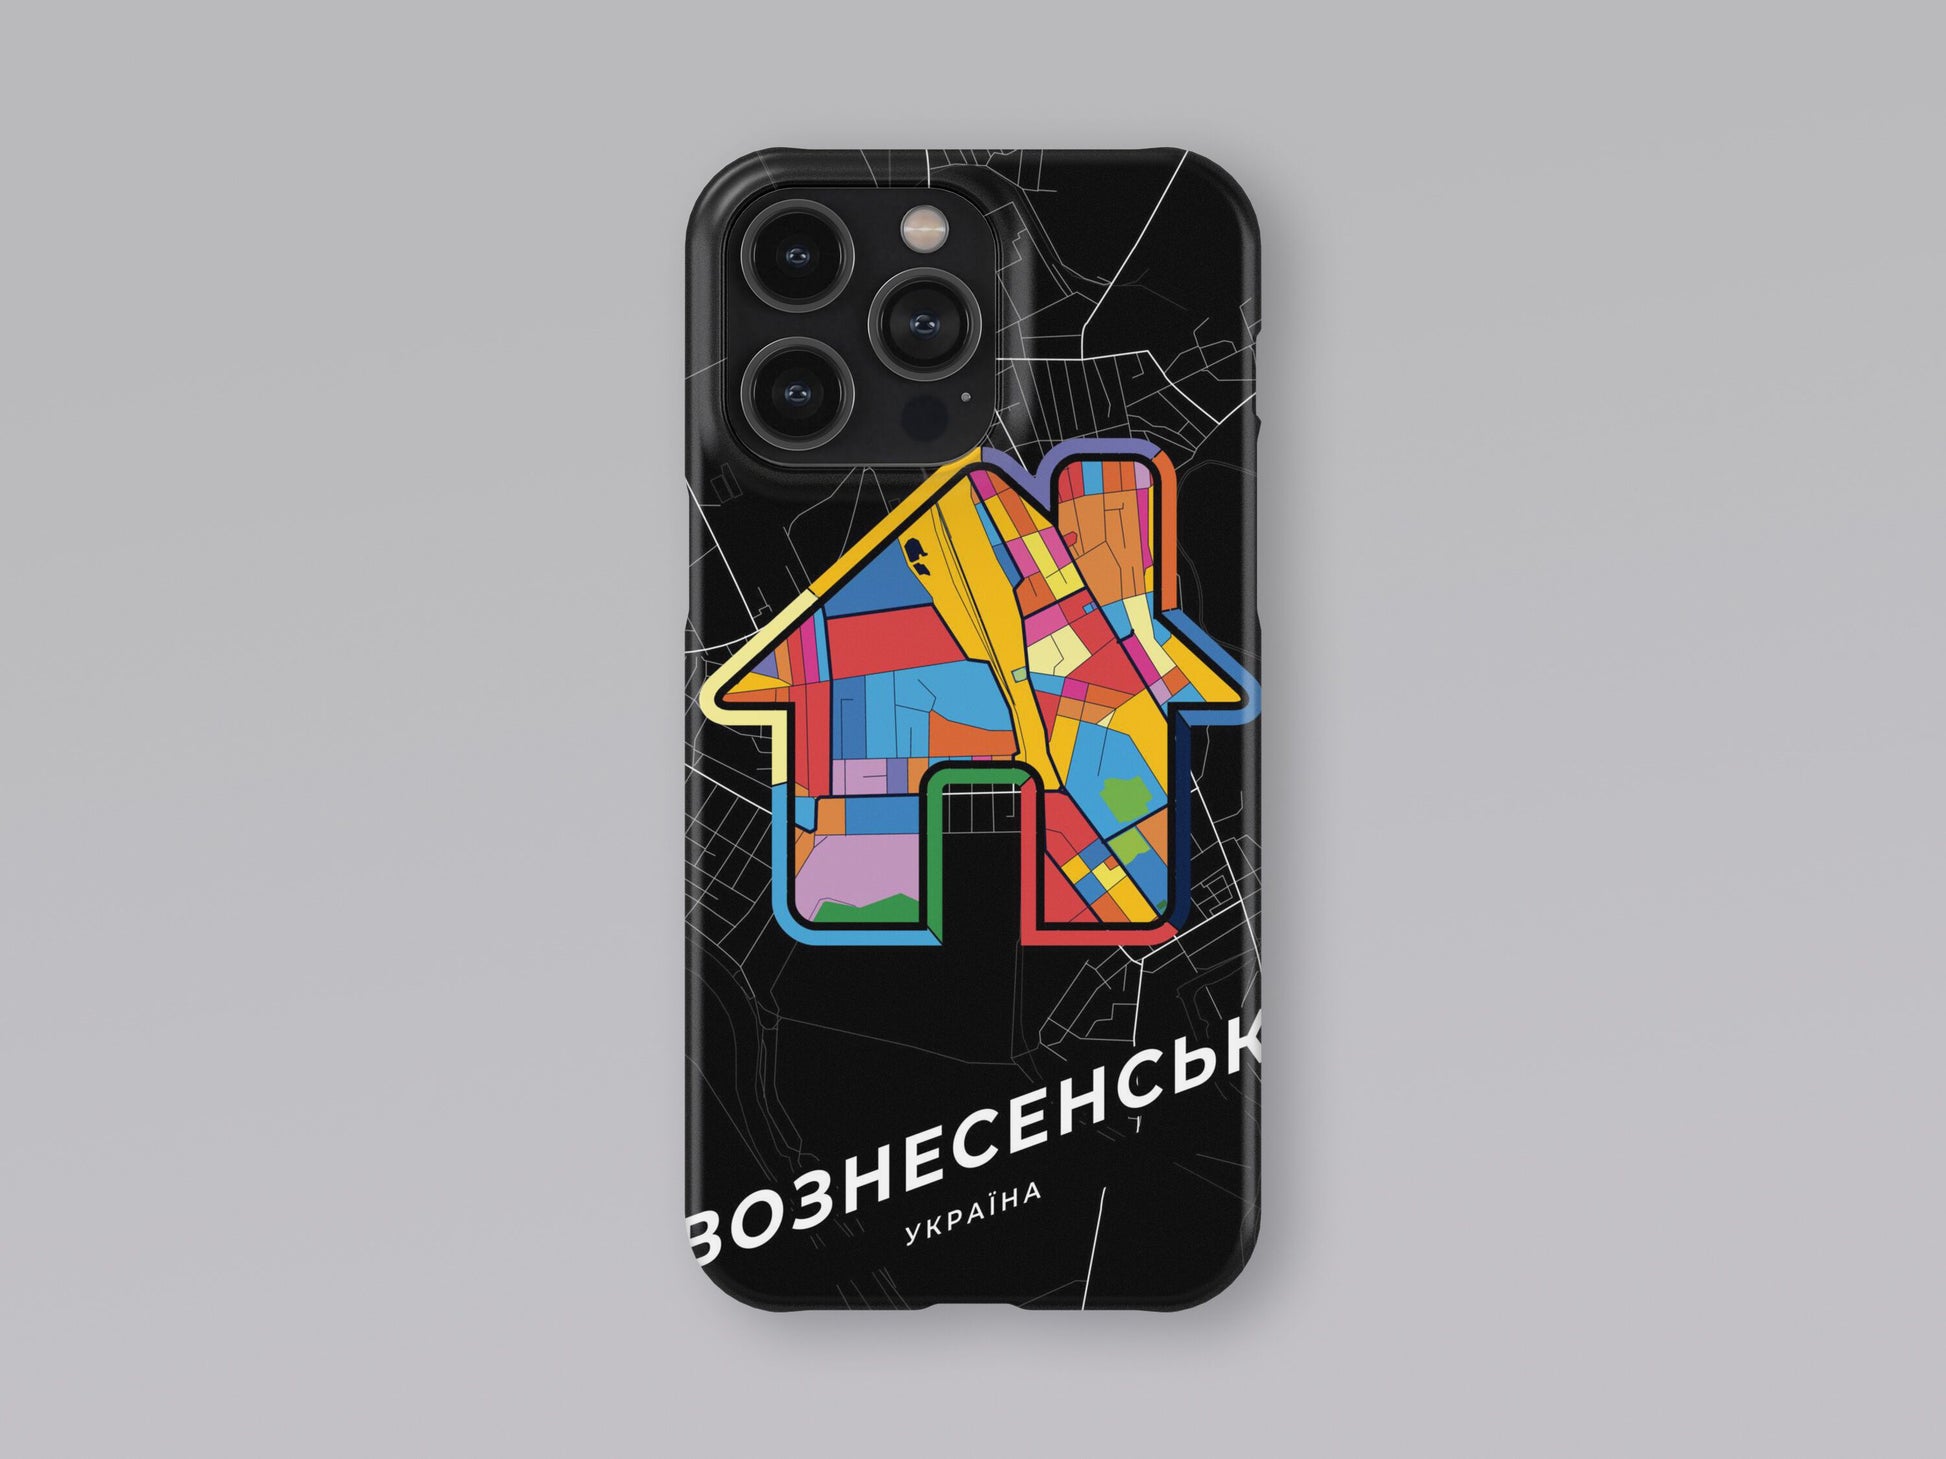 Voznesensk Ukraine slim phone case with colorful icon 3